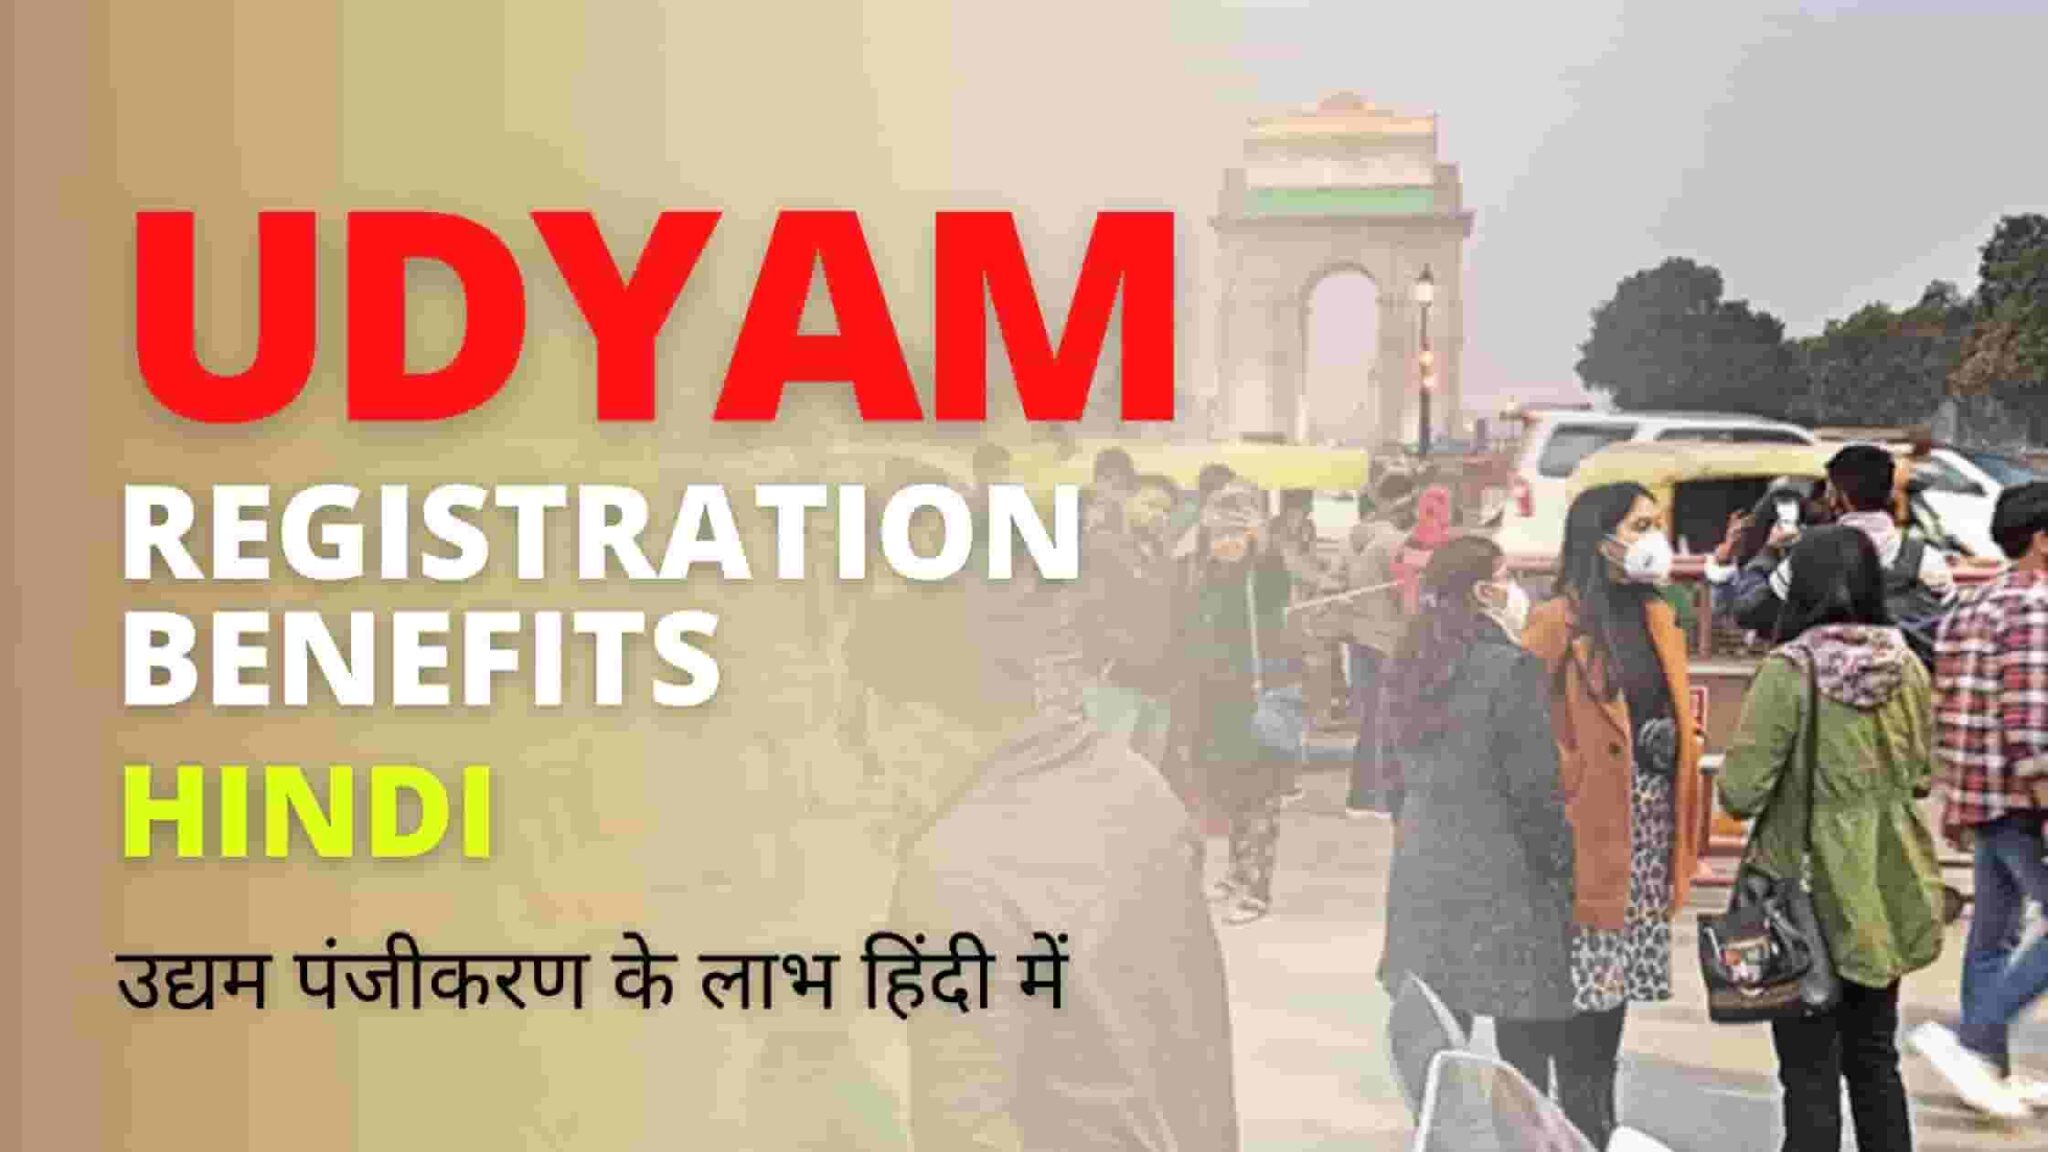 Udyam registration benefits in hindi